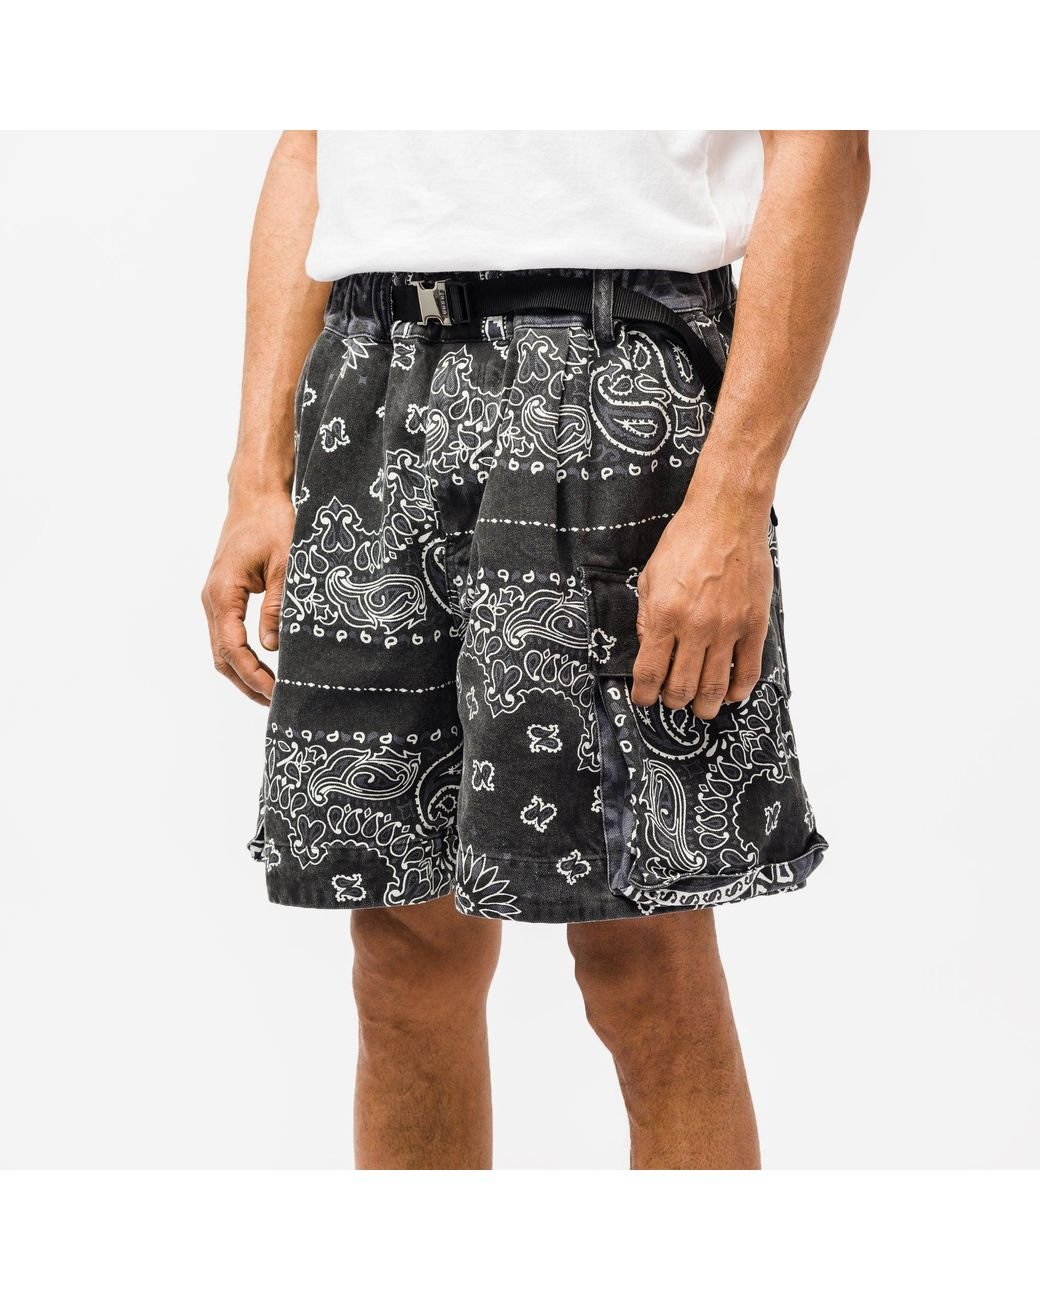 Sacai Cotton Bandana Print Shorts in Black for Men - Lyst